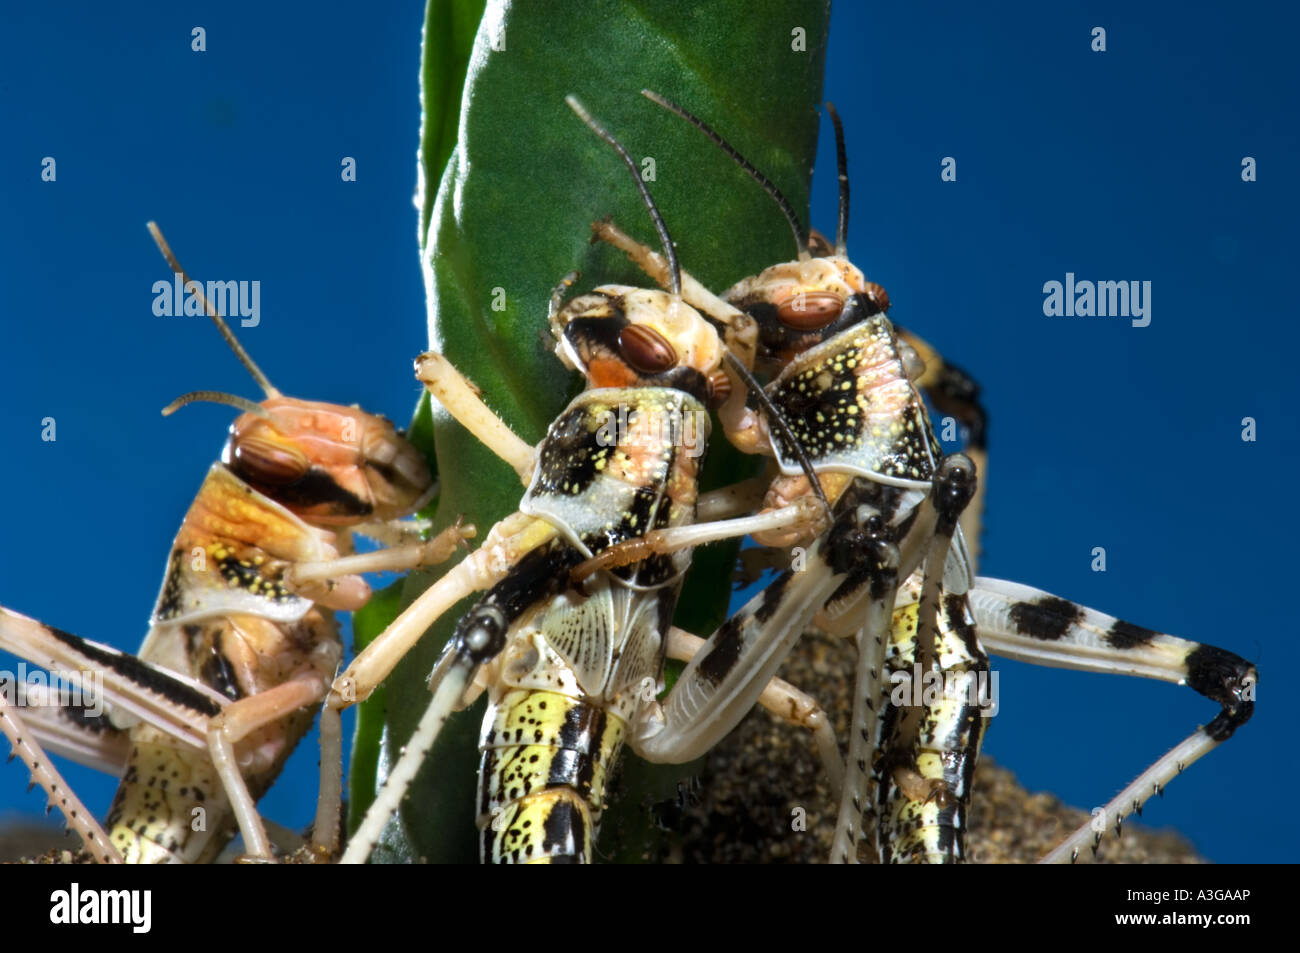 african desert locust Schistocerca gregaria subadult GRASSHOPPER eat feed green leaf  blue background Stock Photo